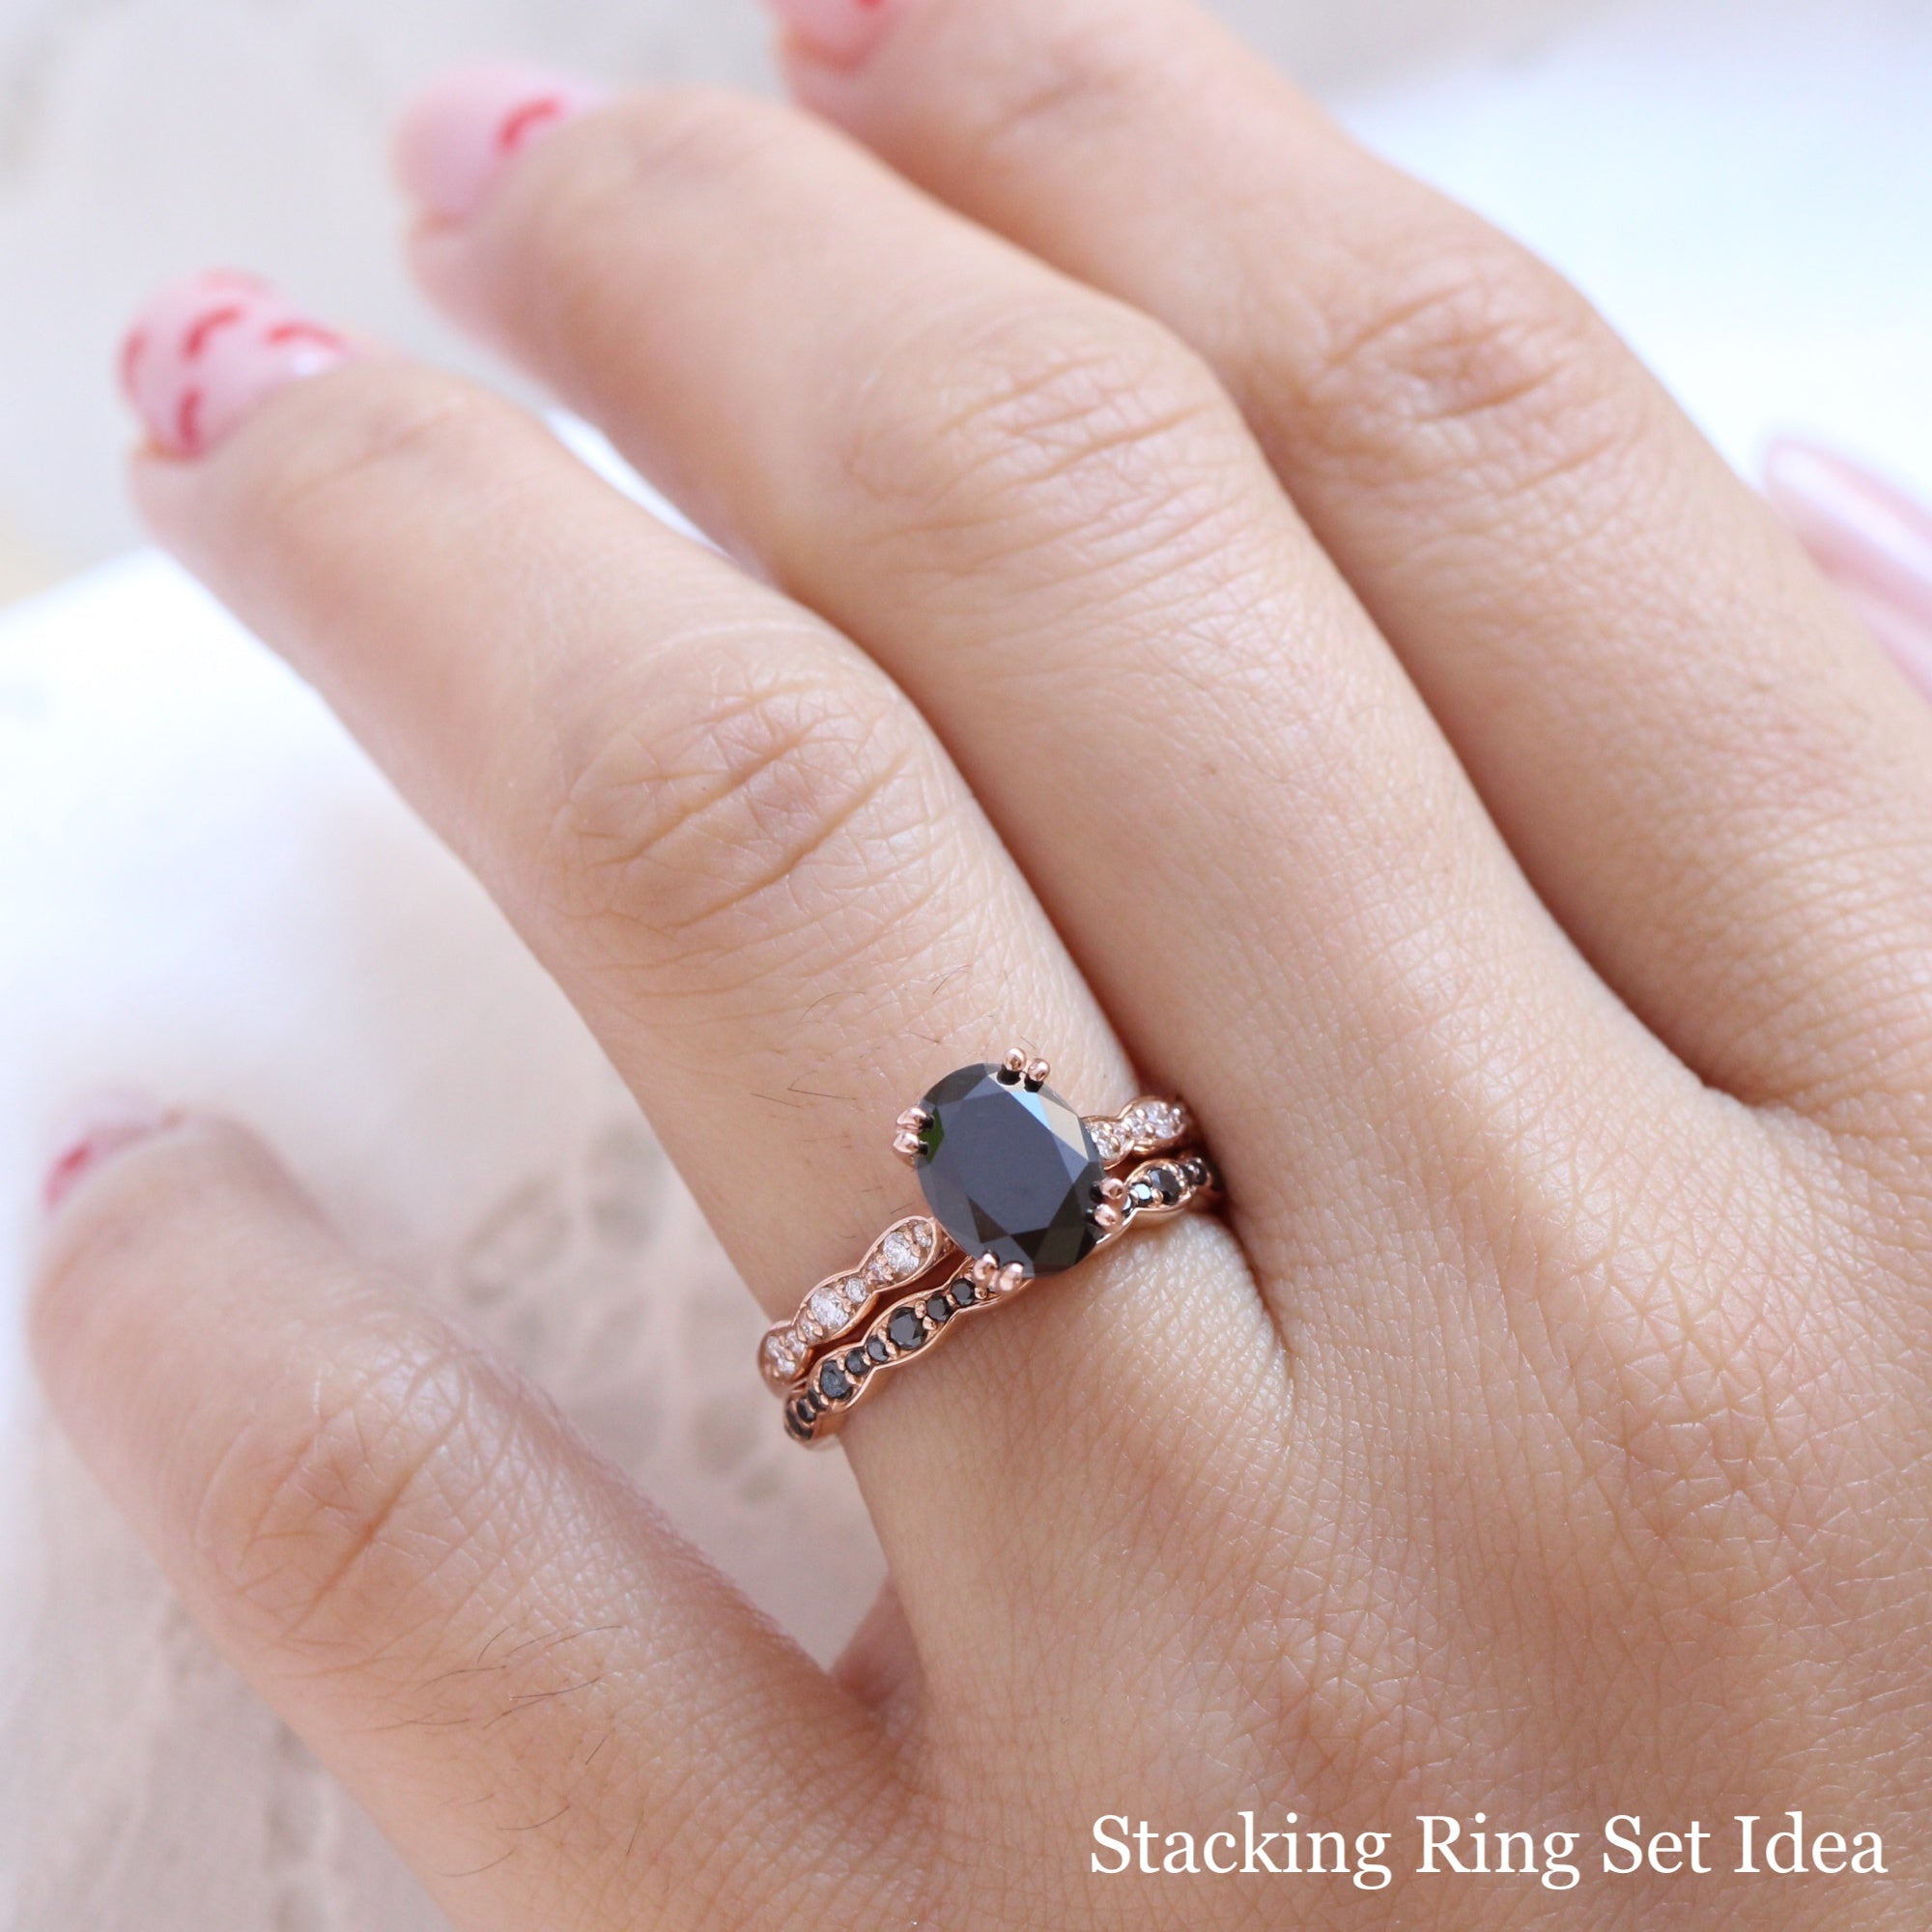 Scalloped Black Diamond Wedding Ring in Vintage Style Half Eternity Band